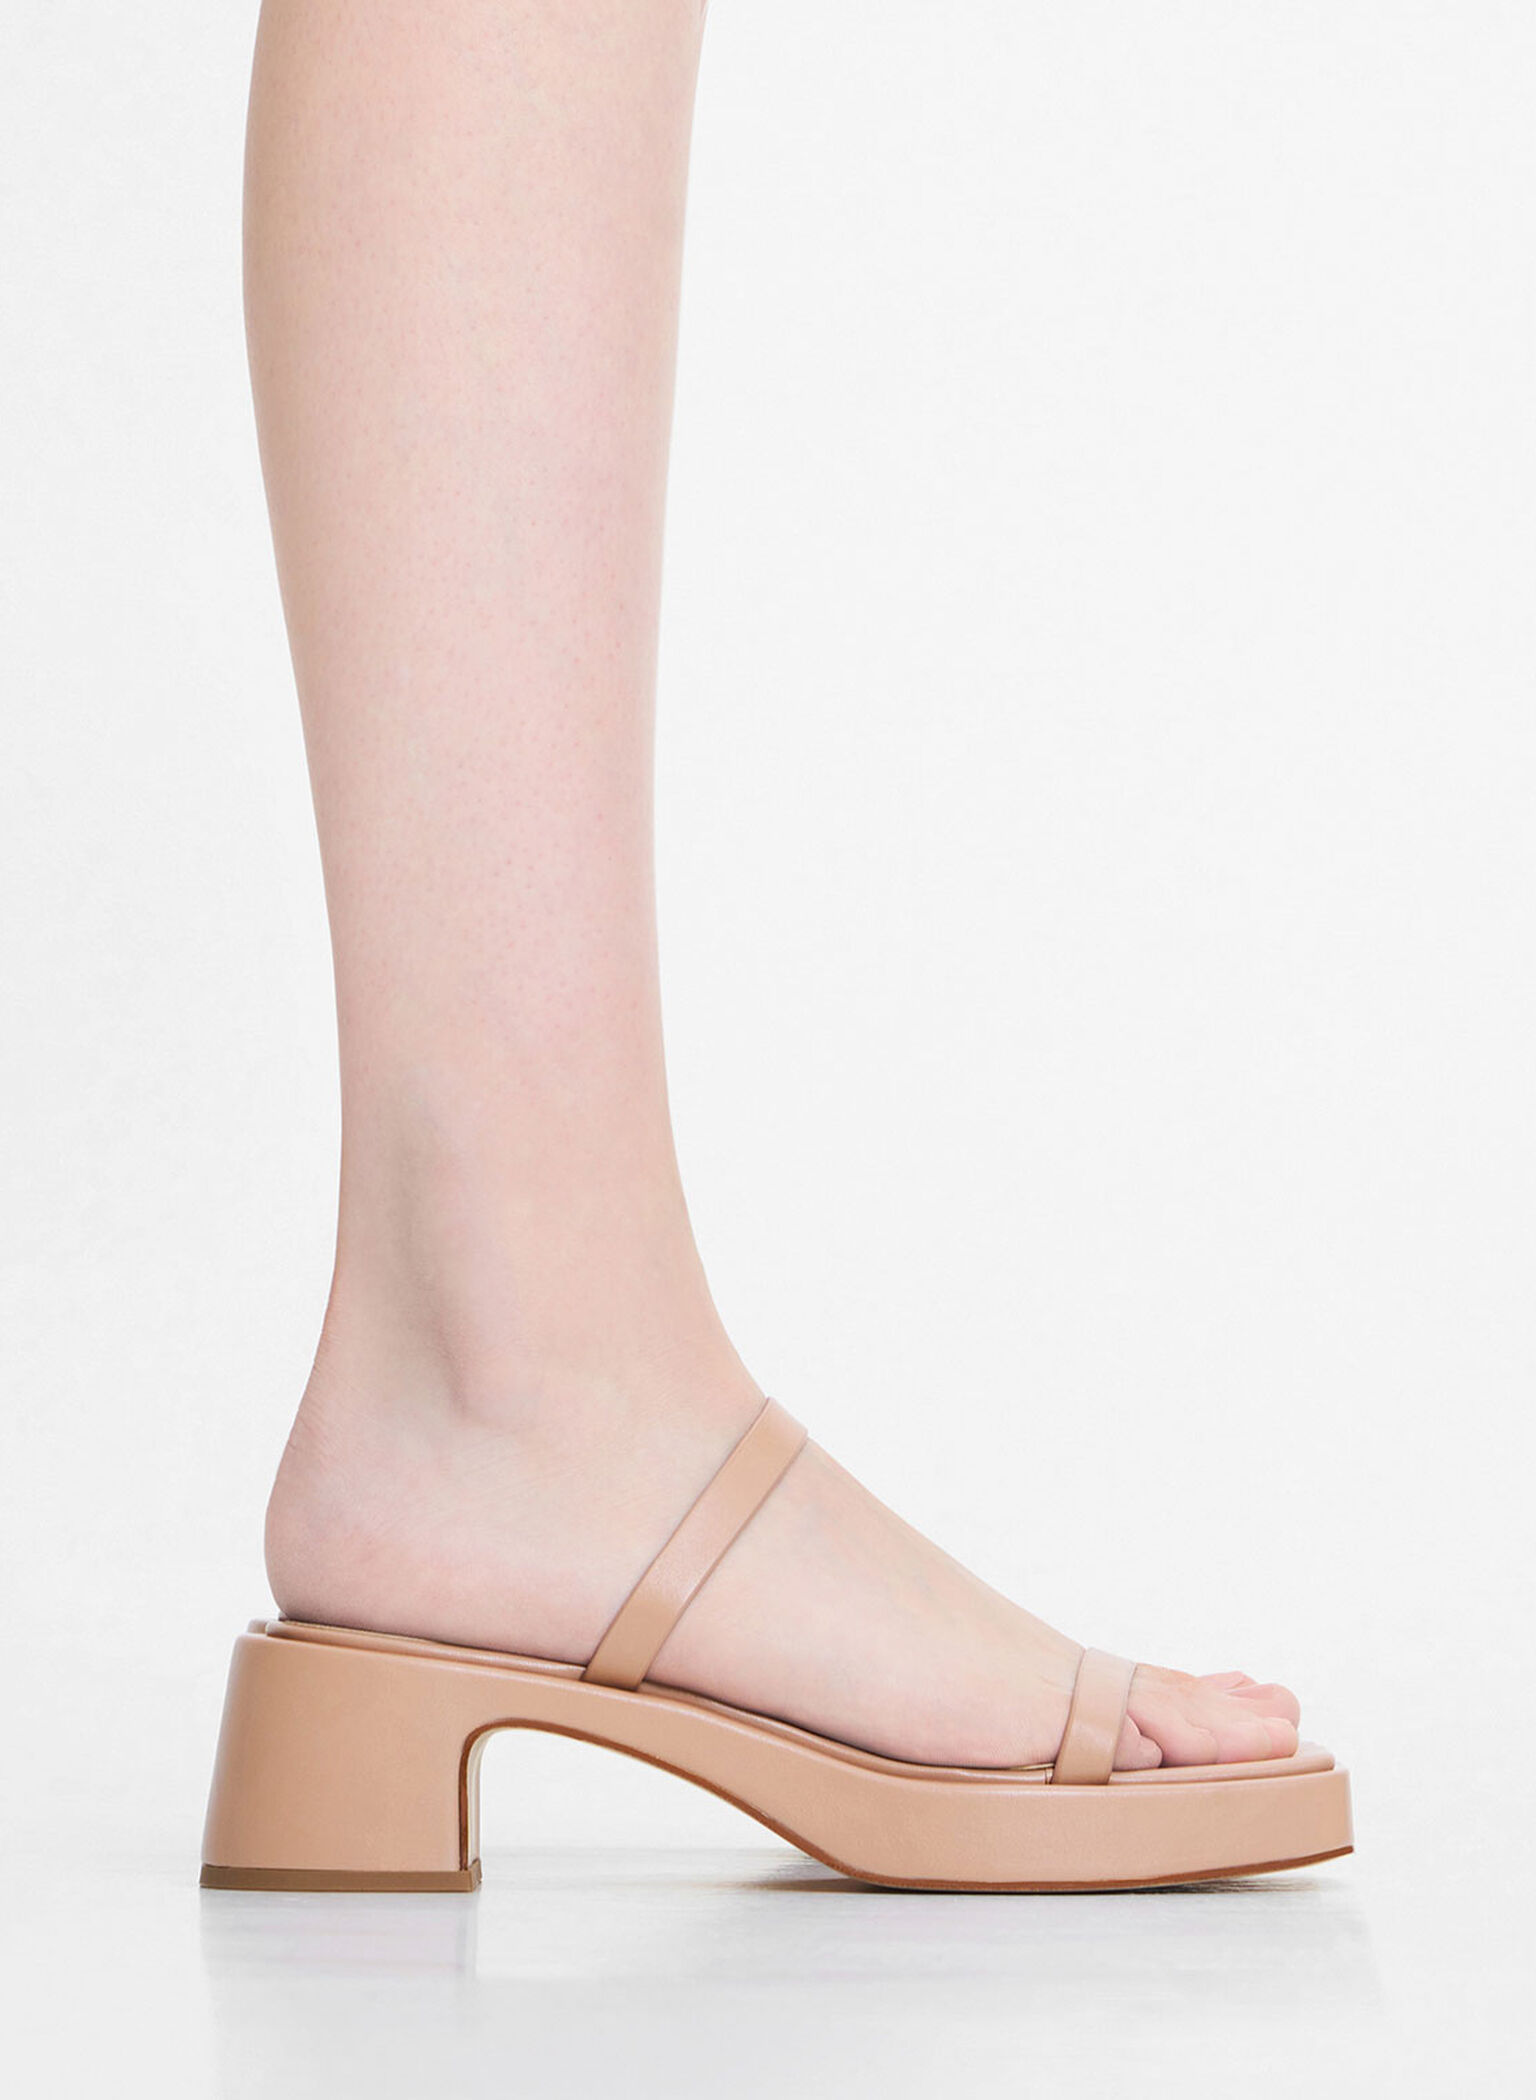 Square-Toe Platform Sandals, Nude, hi-res